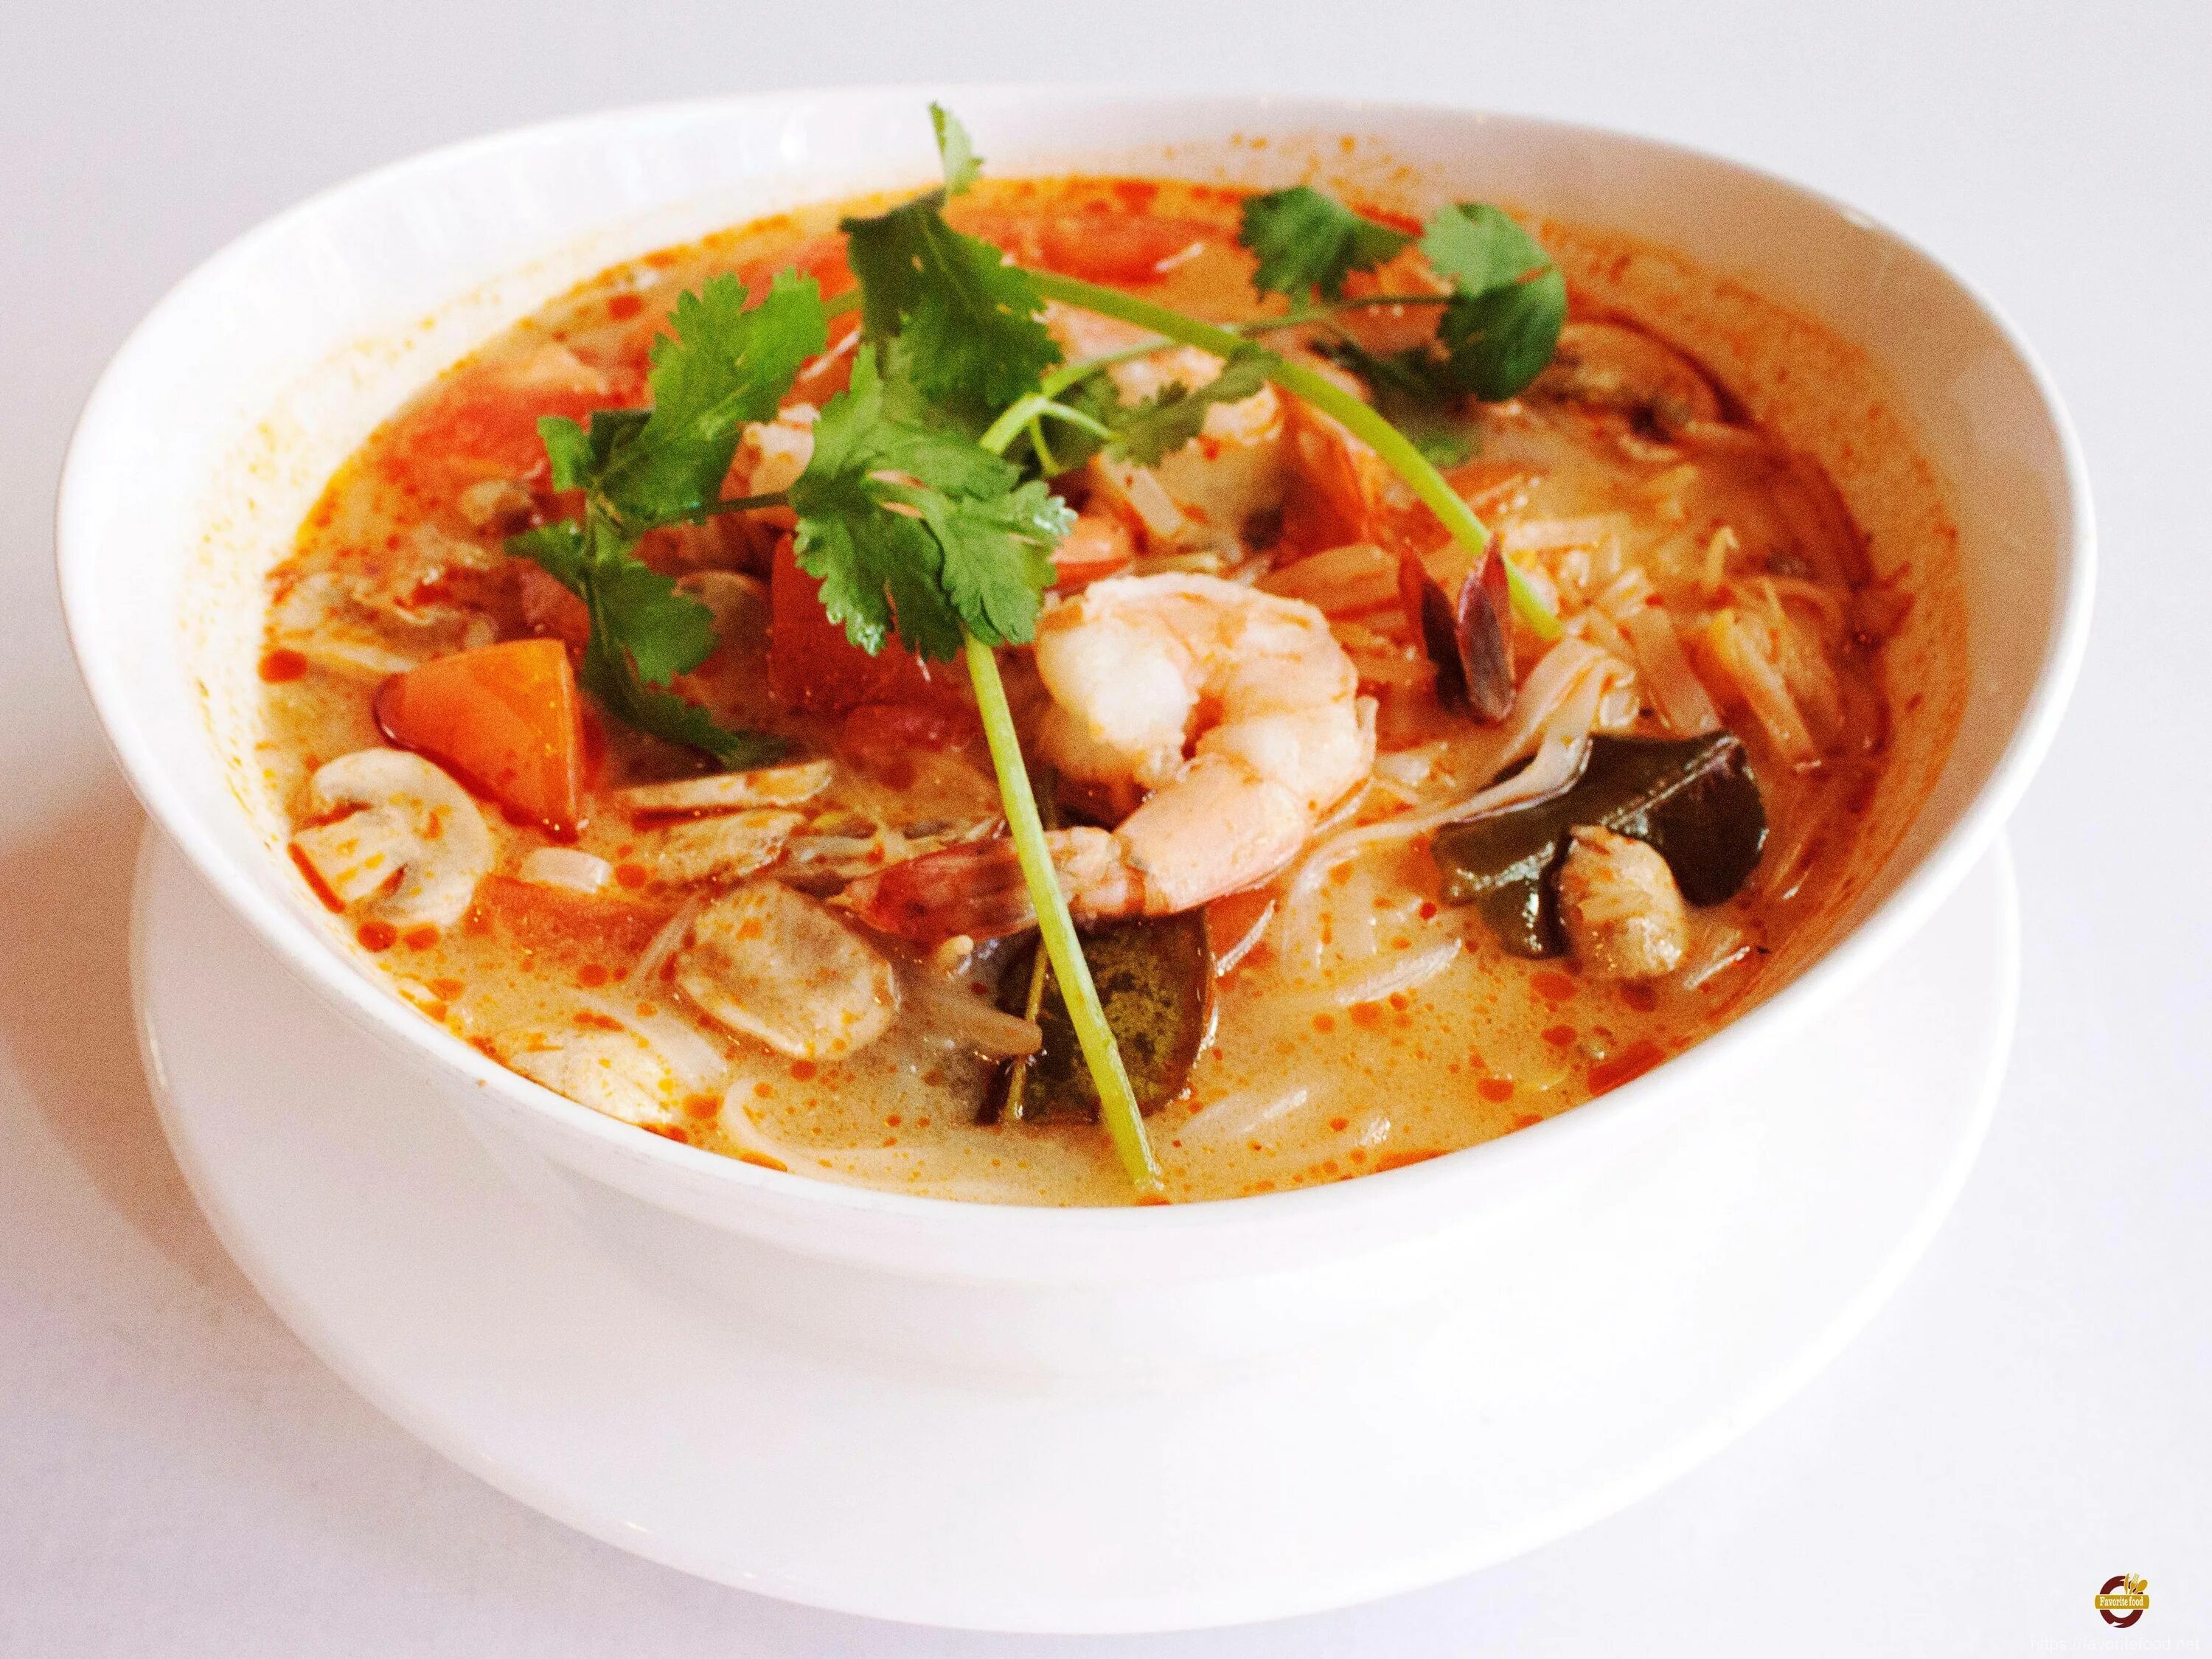 Tom Yum суп. Тайский суп том ям с креветками. Суп Tom Yum (том ям). Том ям кунг (Tom Yum Kung).